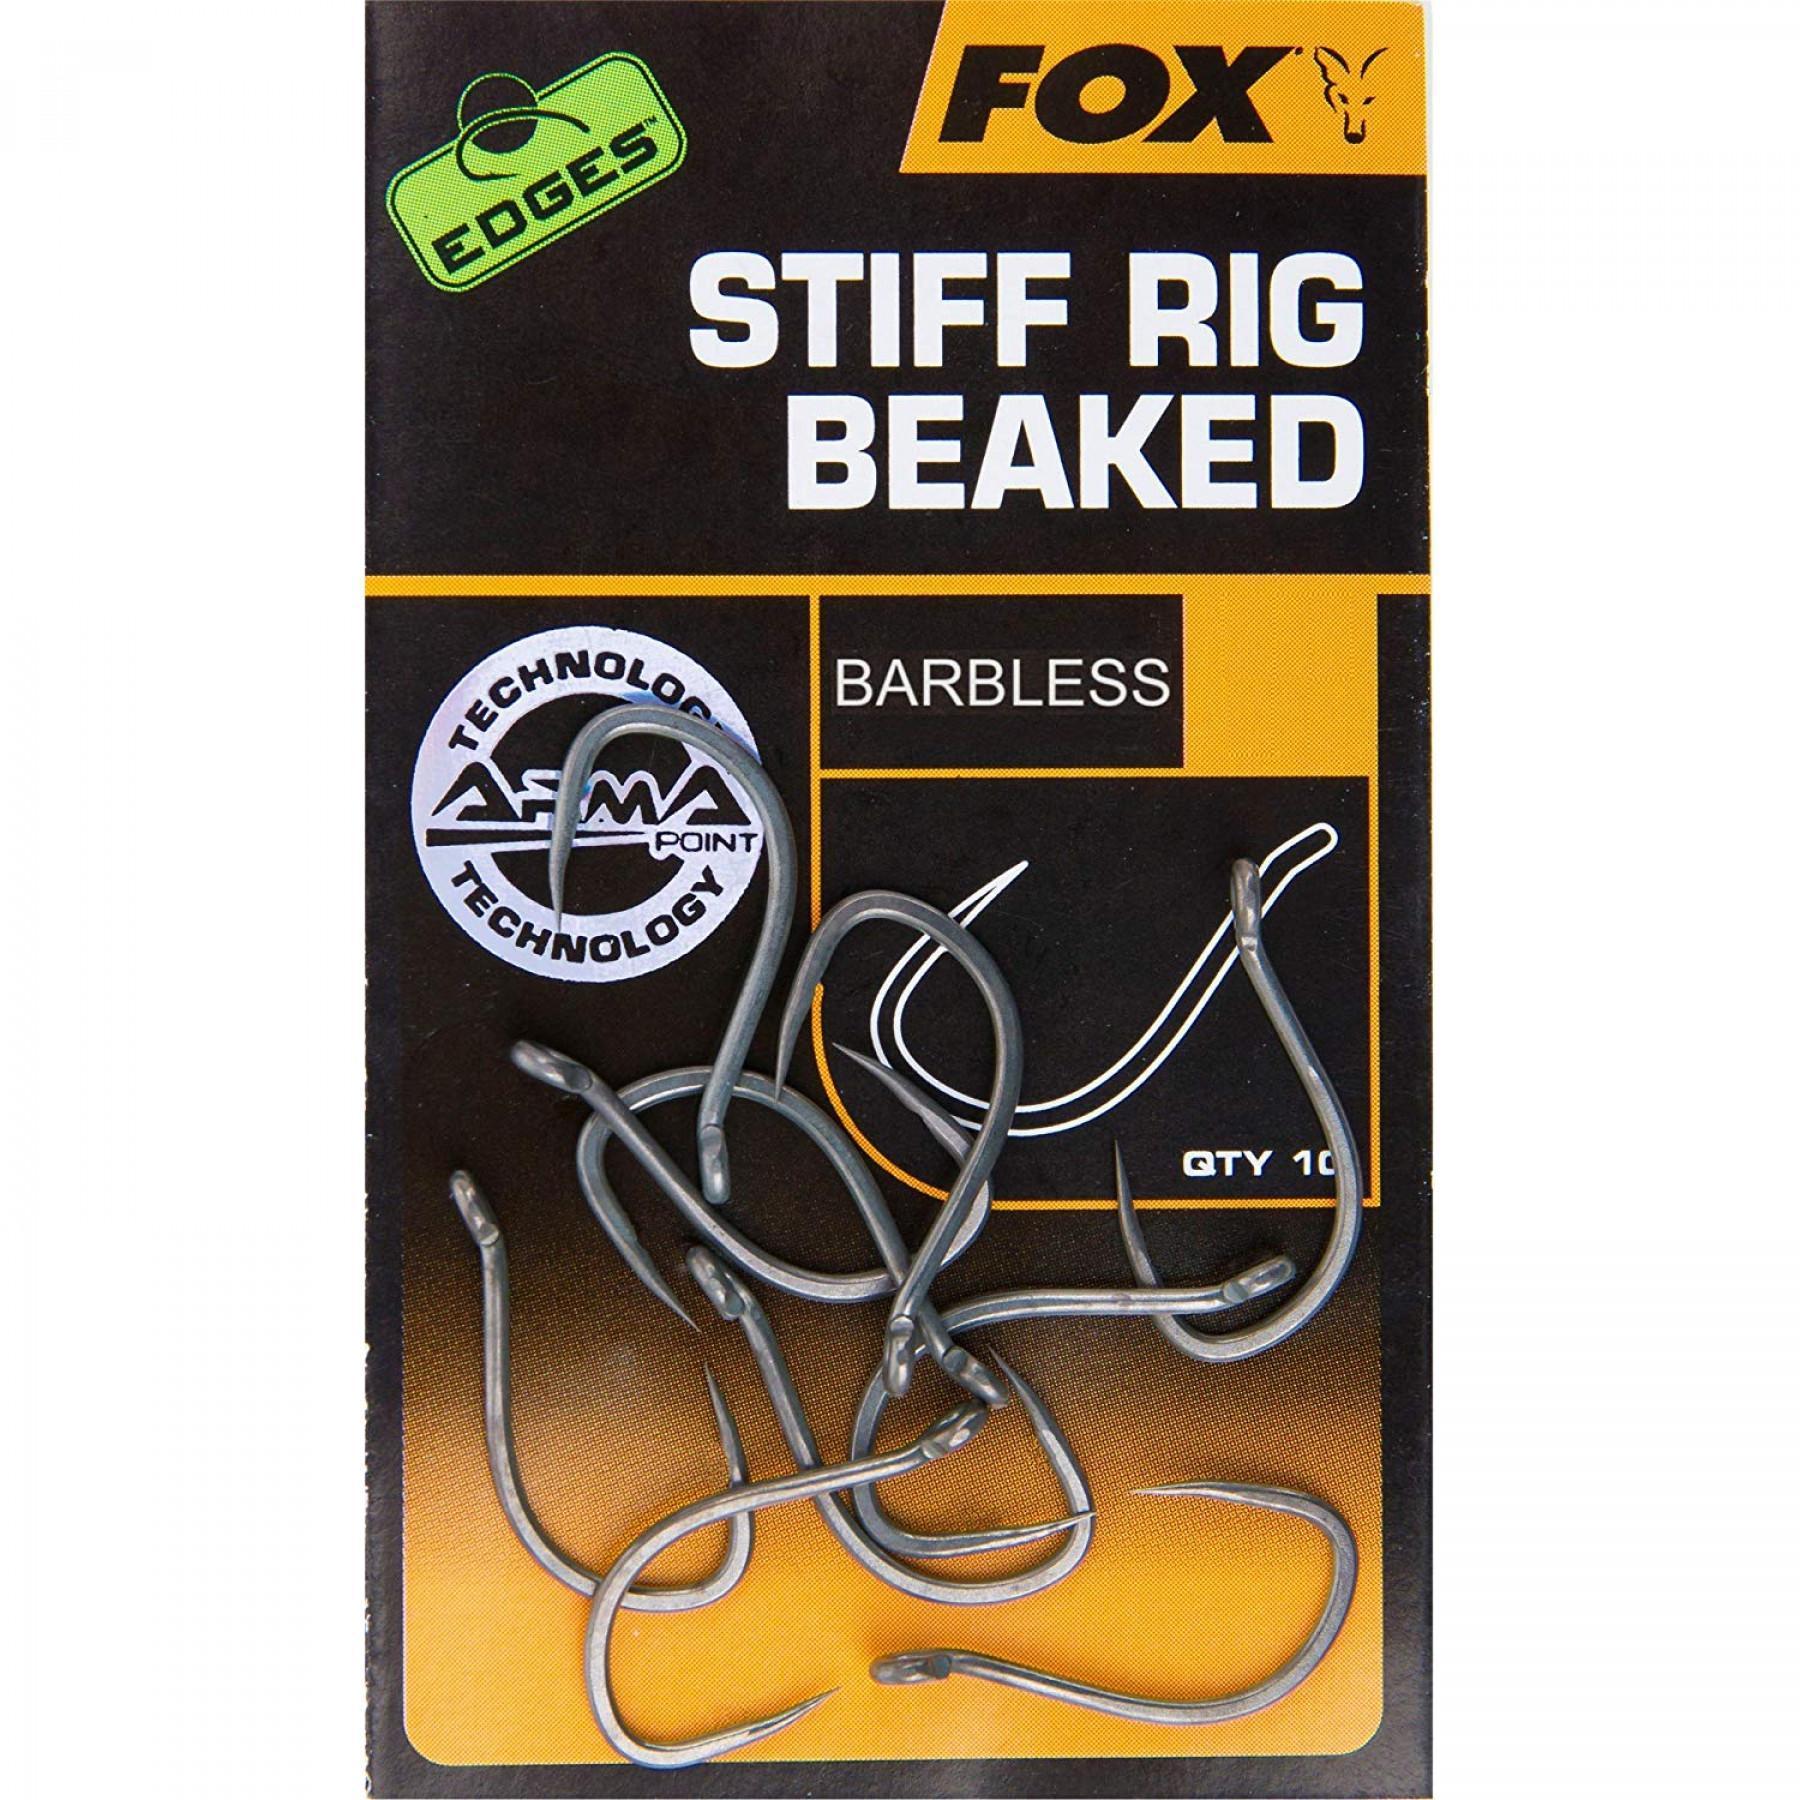 Gancio Fox Stiff Rig Beaked Edges taille 6B Barbless